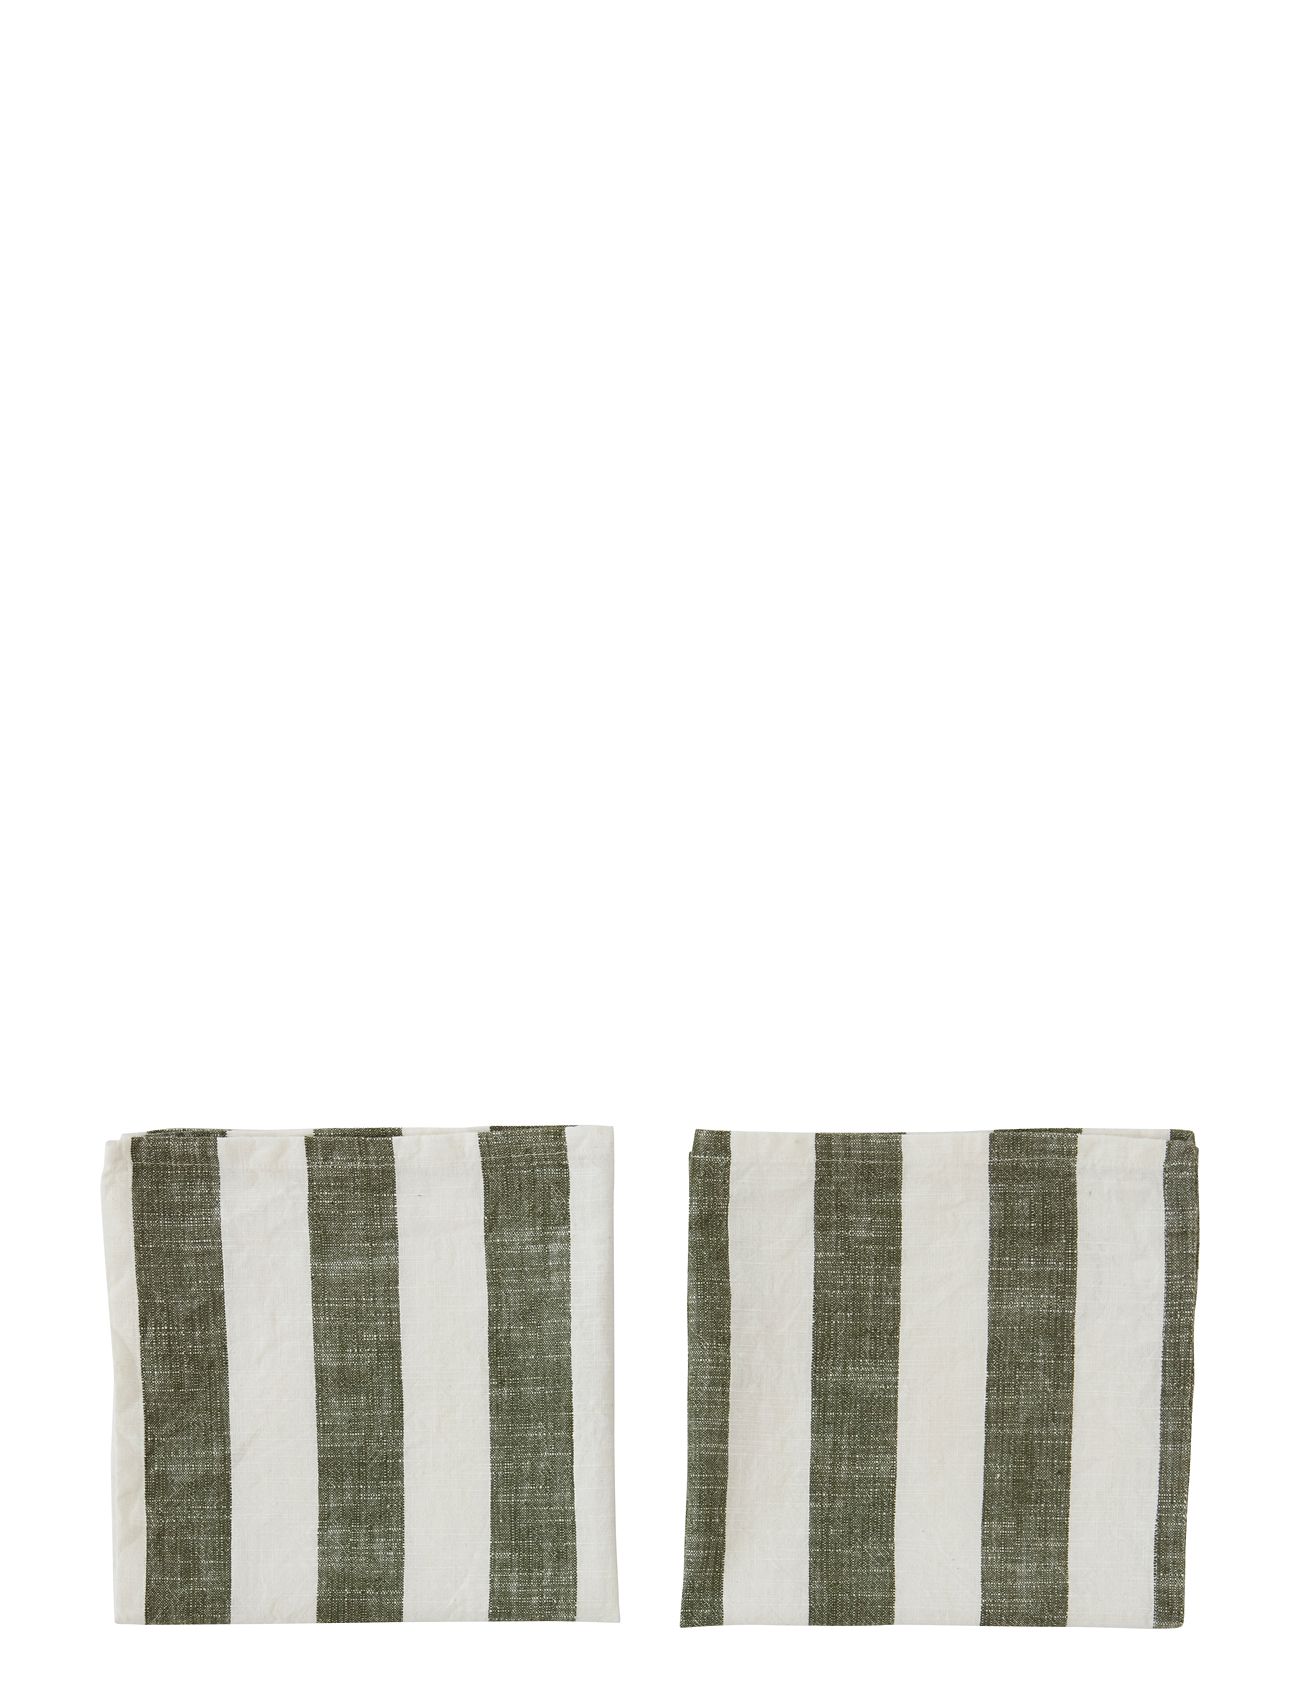 Striped Napkin - Pack Of 2 Home Textiles Kitchen Textiles Napkins Cloth Napkins Multi/patterned OYOY Living Design